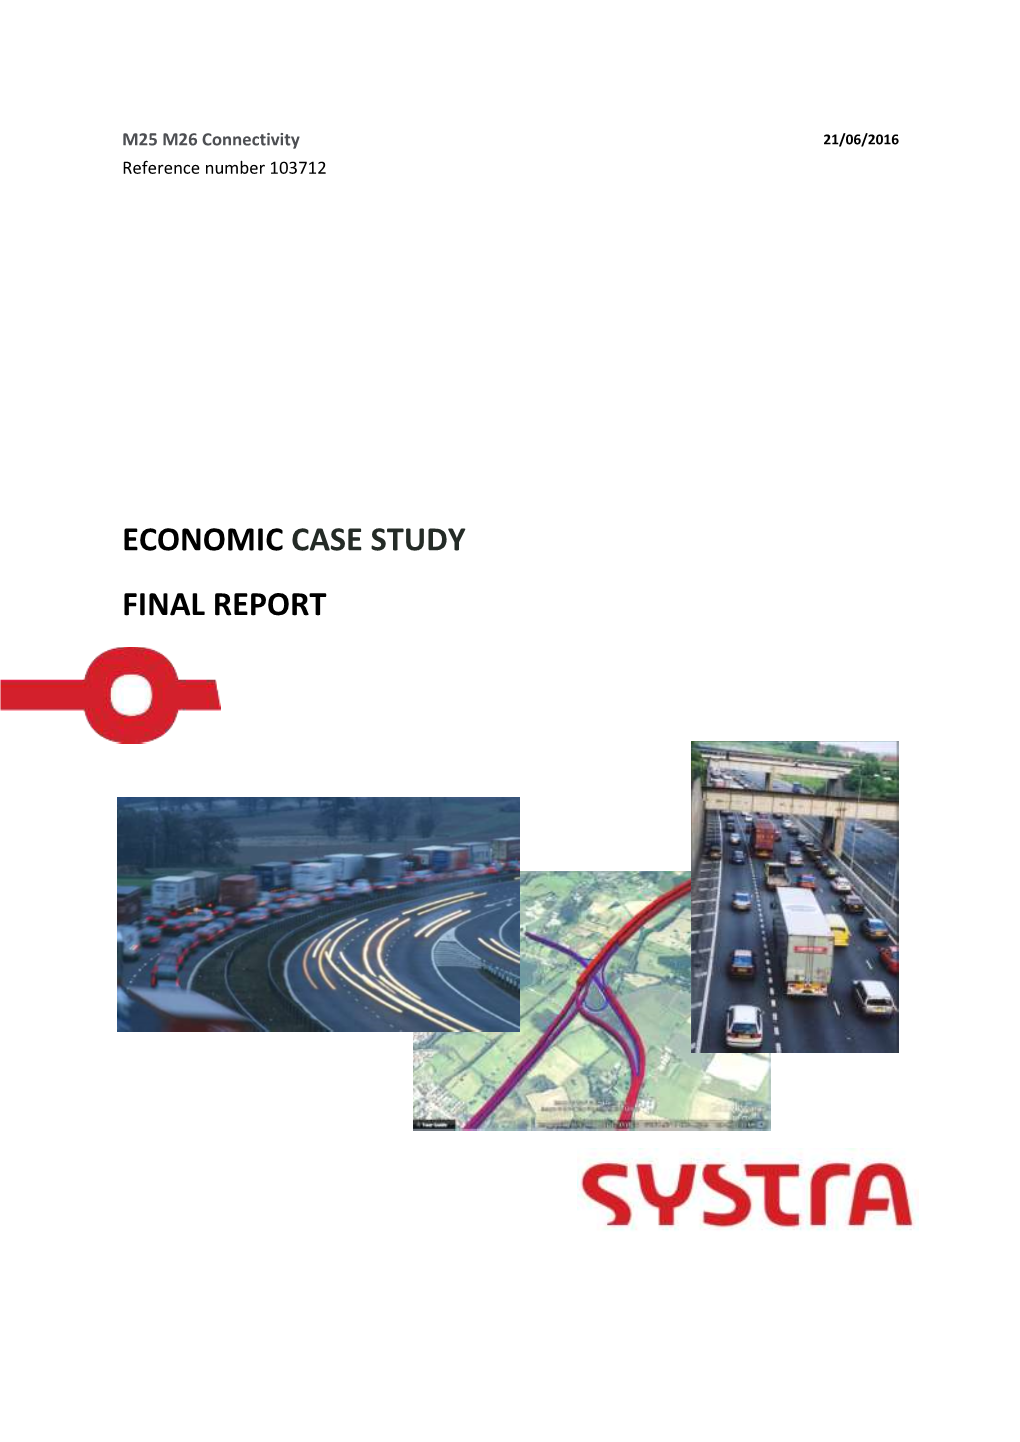 M25 and M26 Economic Case Study